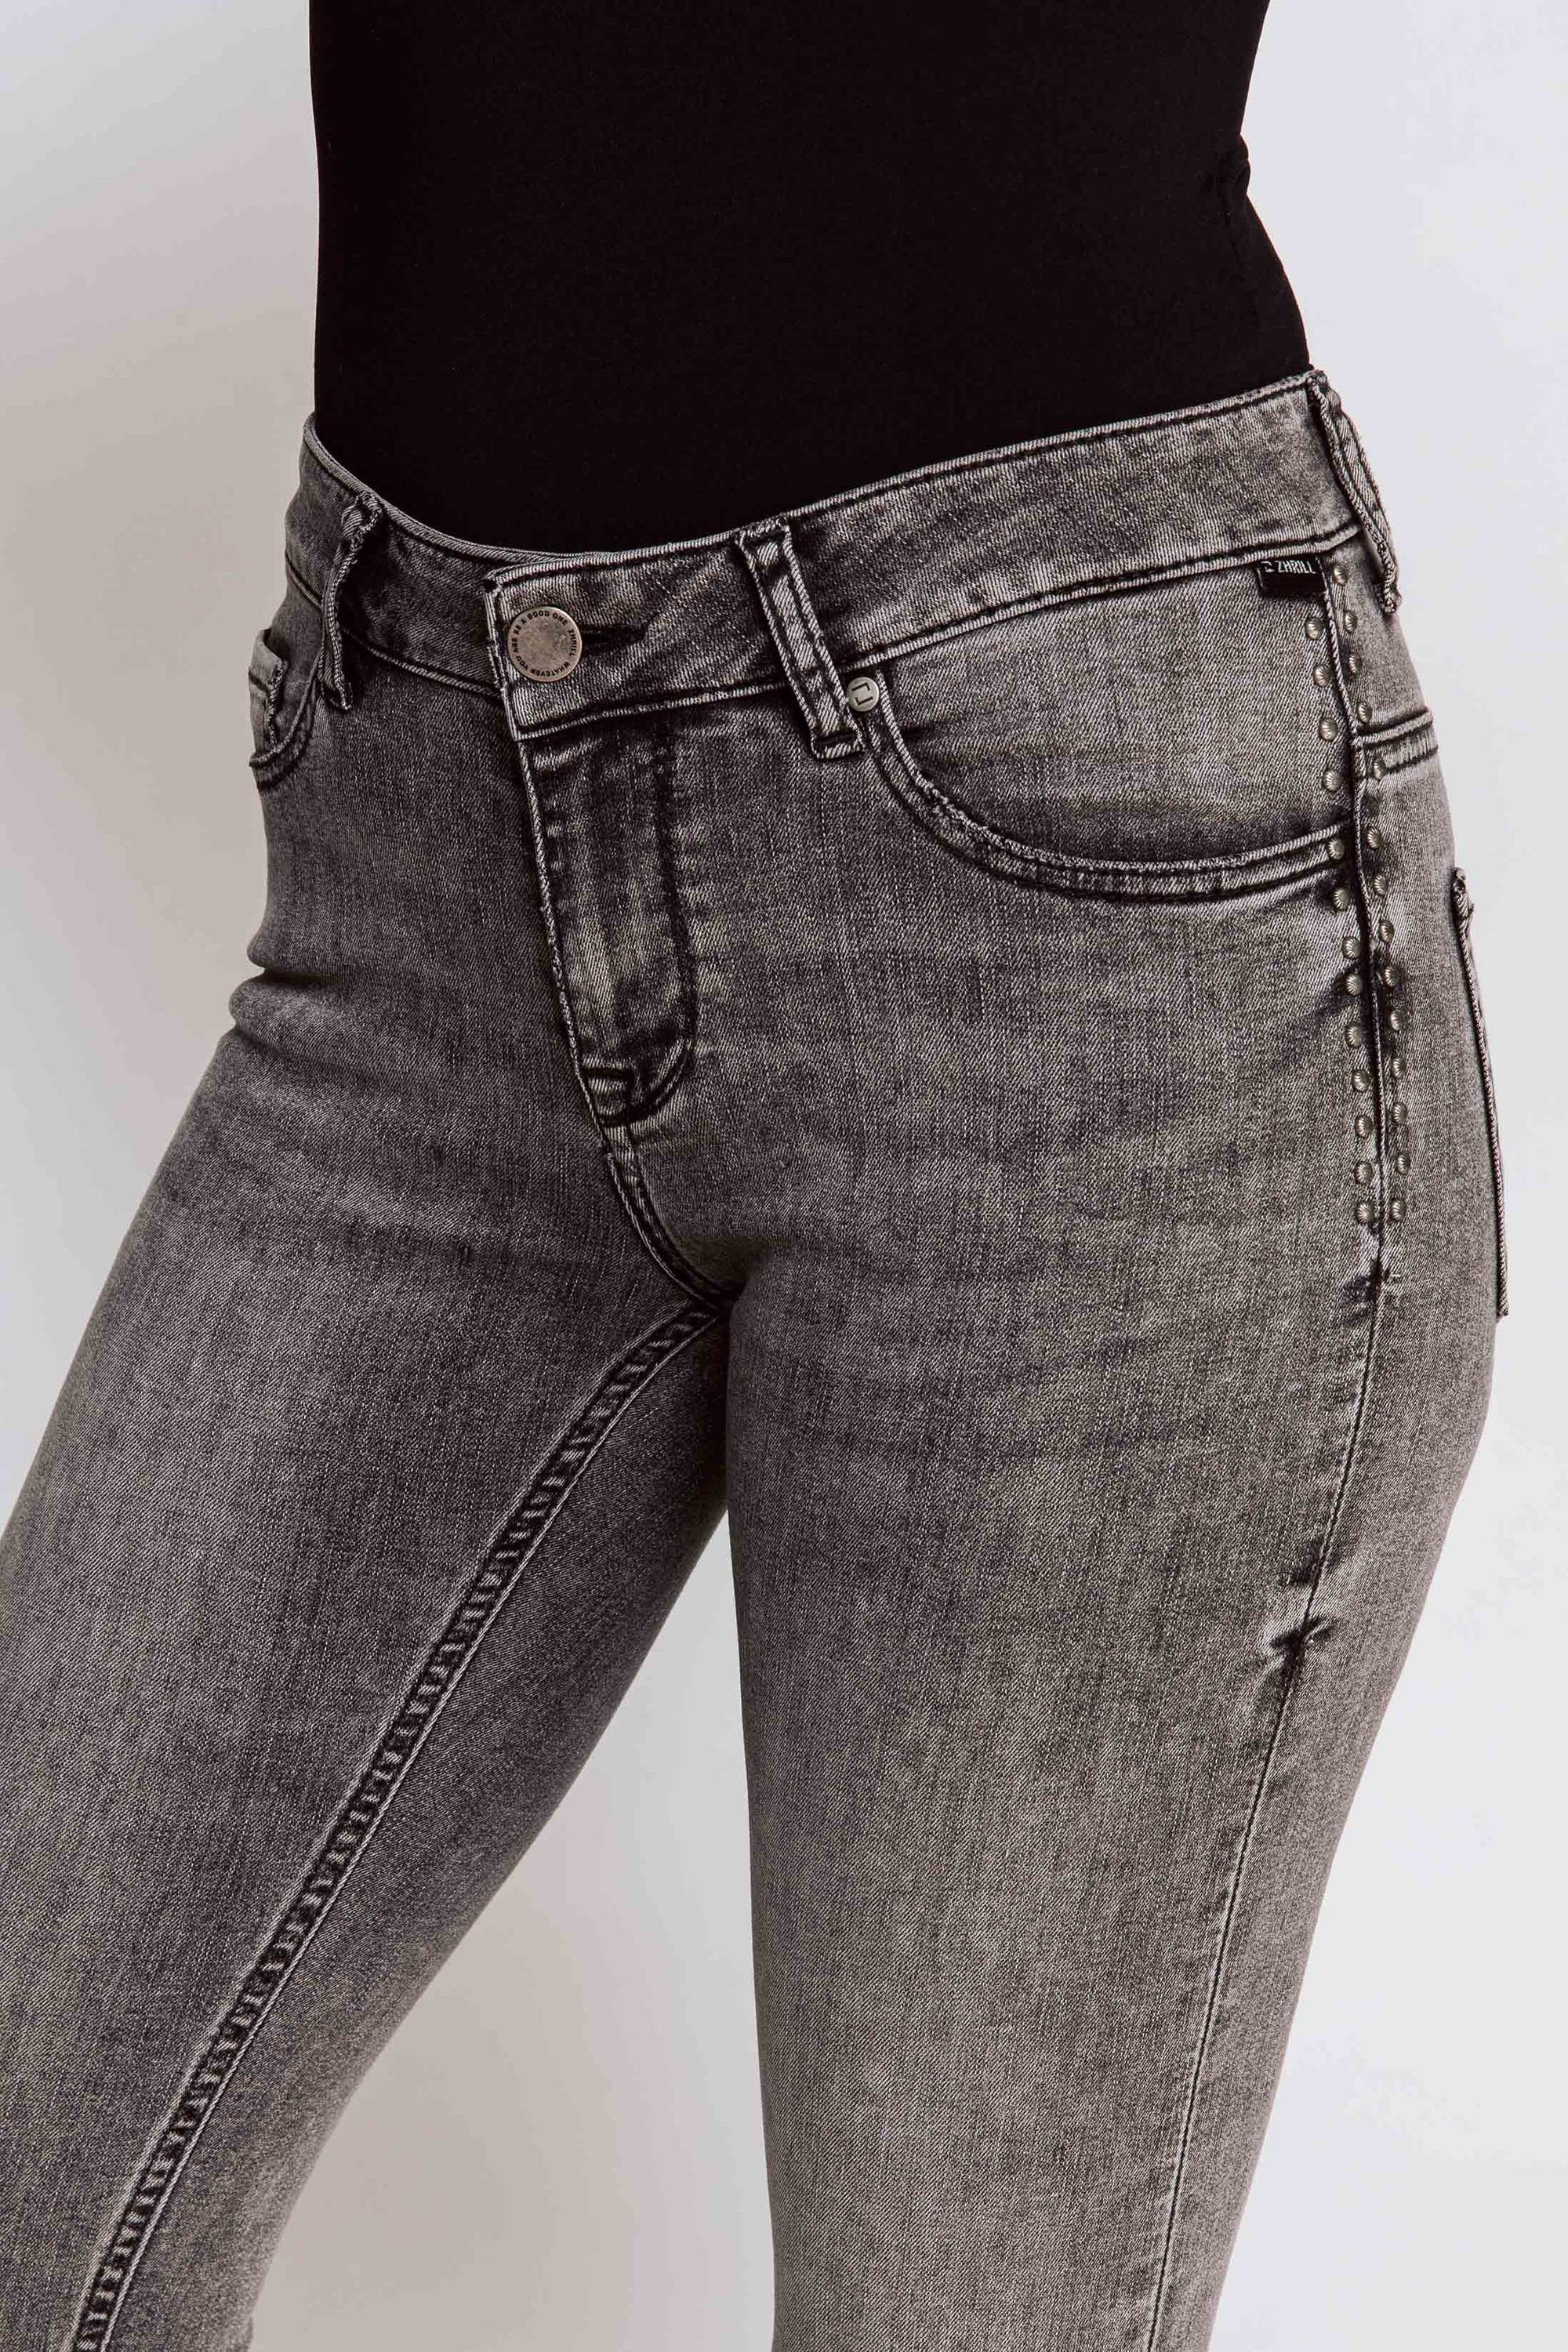 Jeans Zhrill Skinny-fit-Jeans Tragekomfort Skinny angenehmer DAFFY Grau